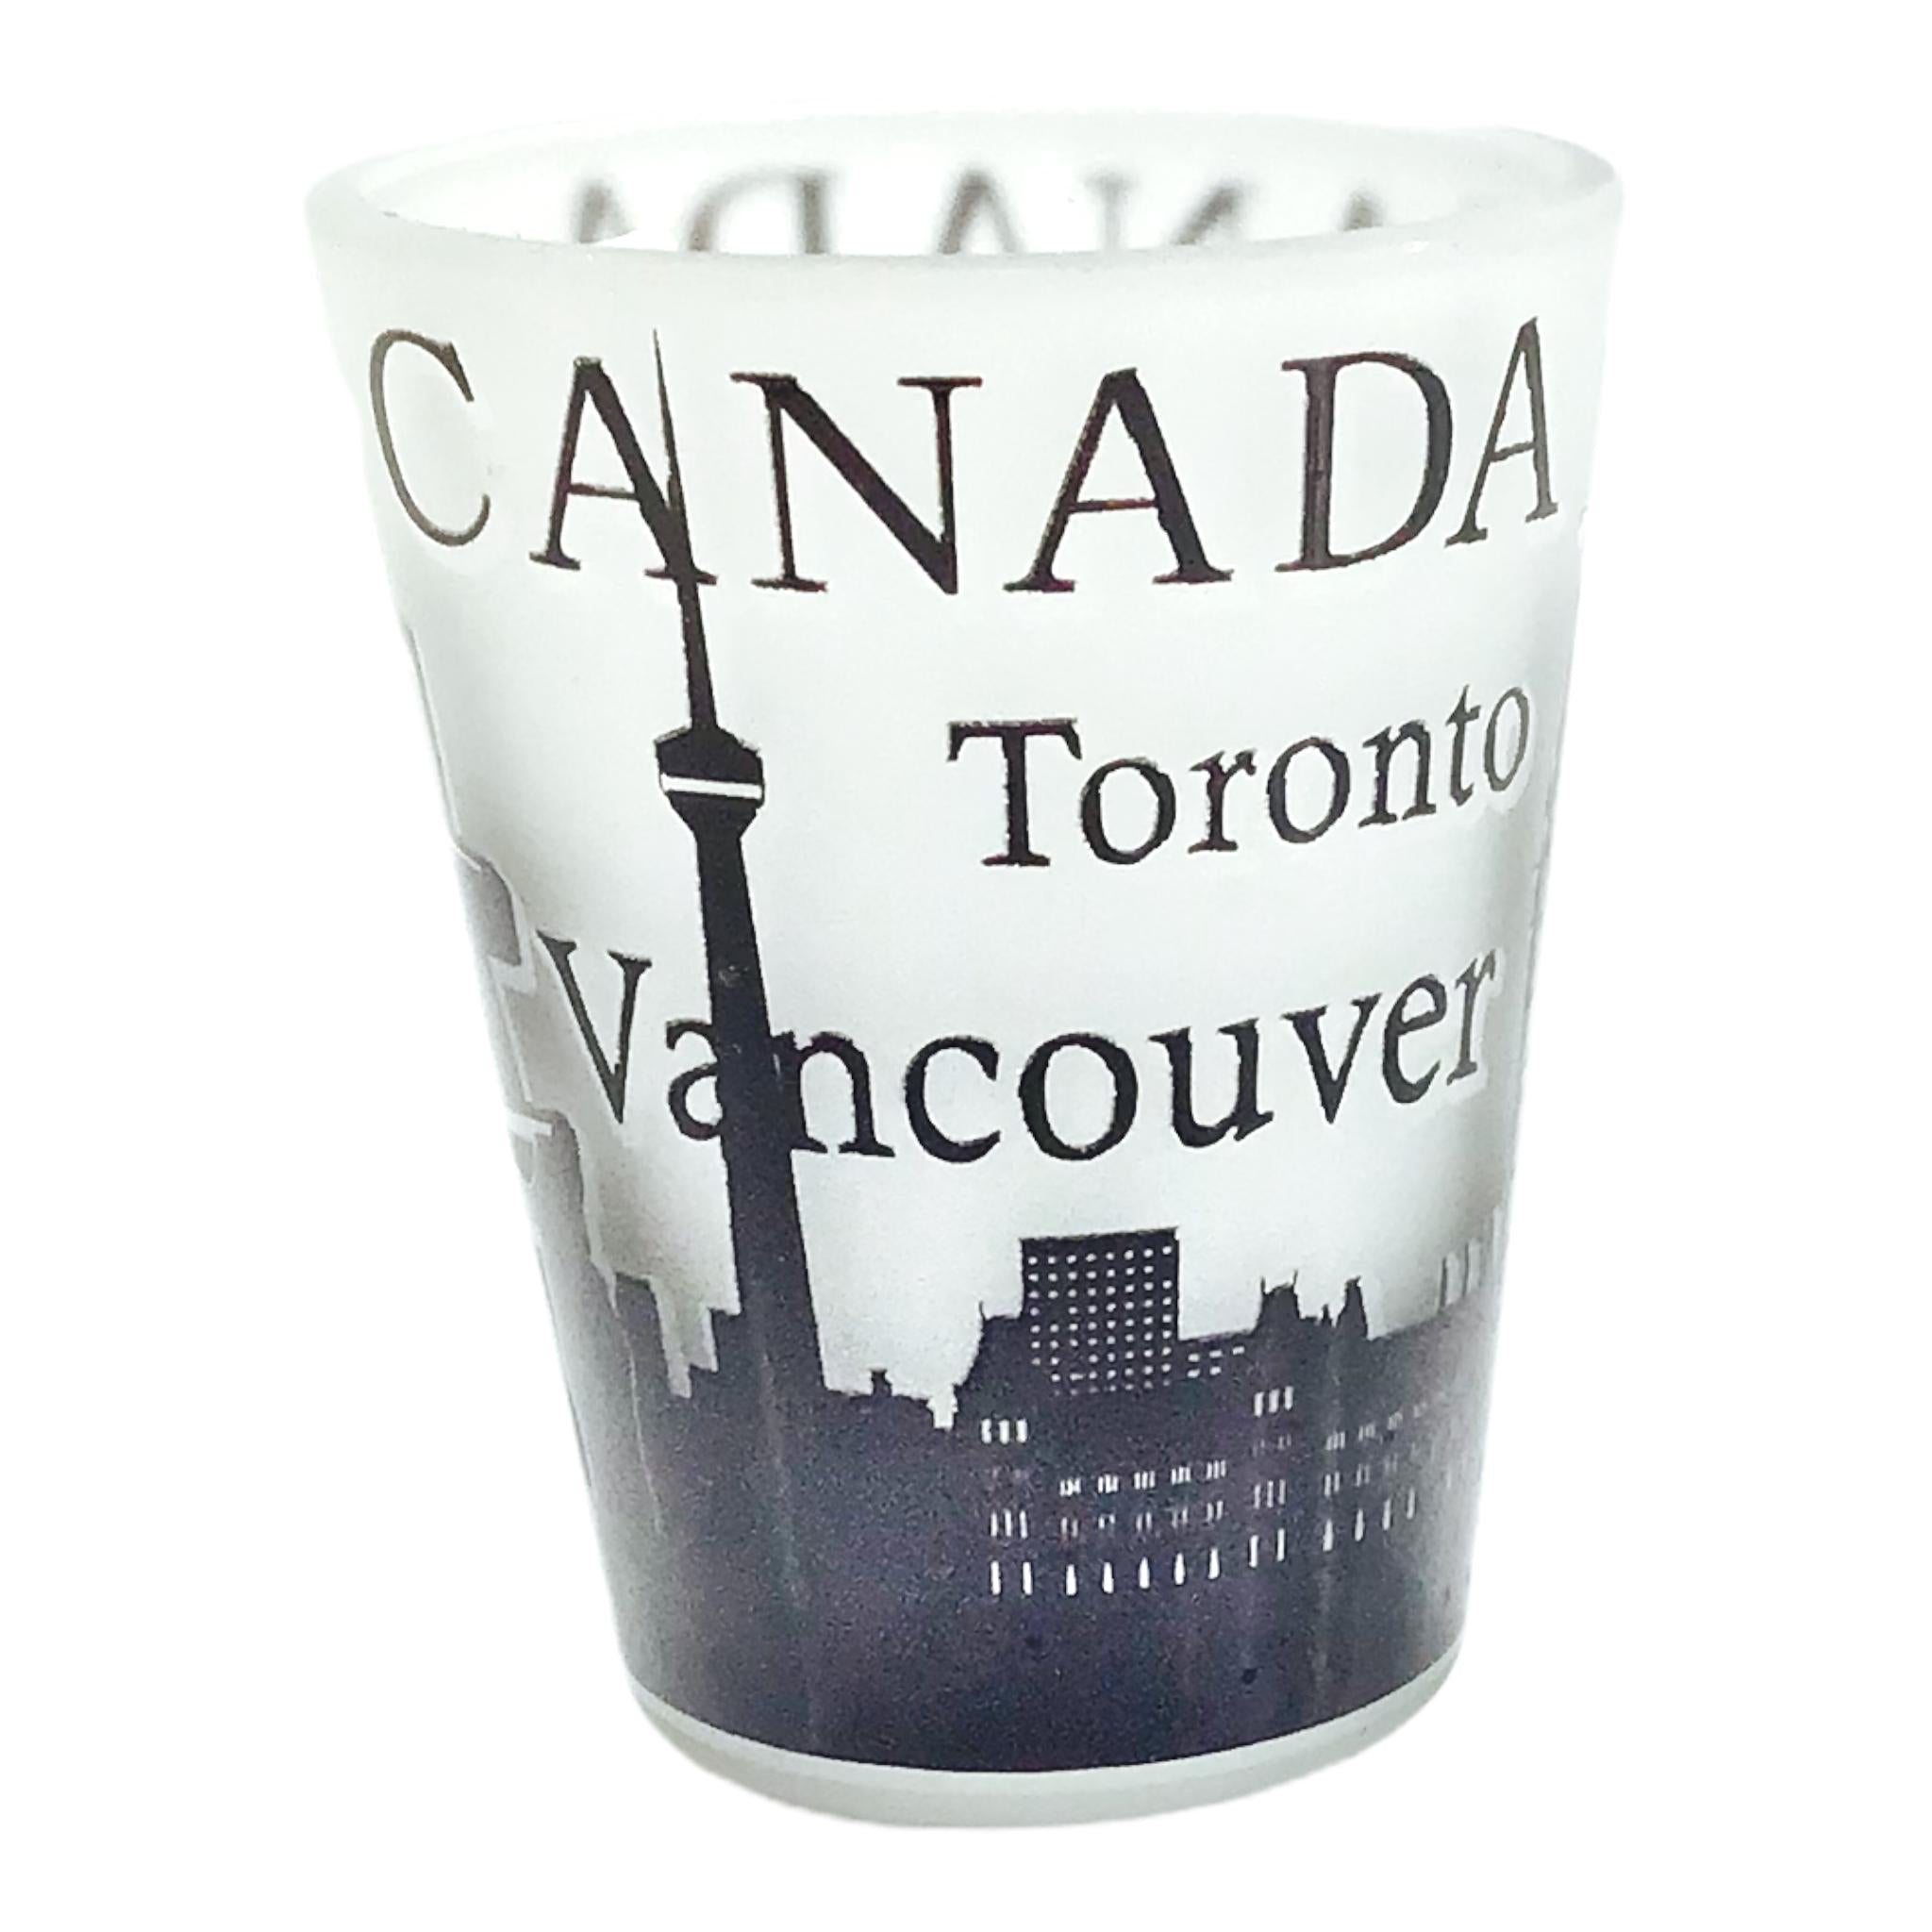 Canada Vintage Landmark Frosted Shot Glass, 1.5-Ounce Heavy Base Shot Glass Set, Whiskey Shot Glass